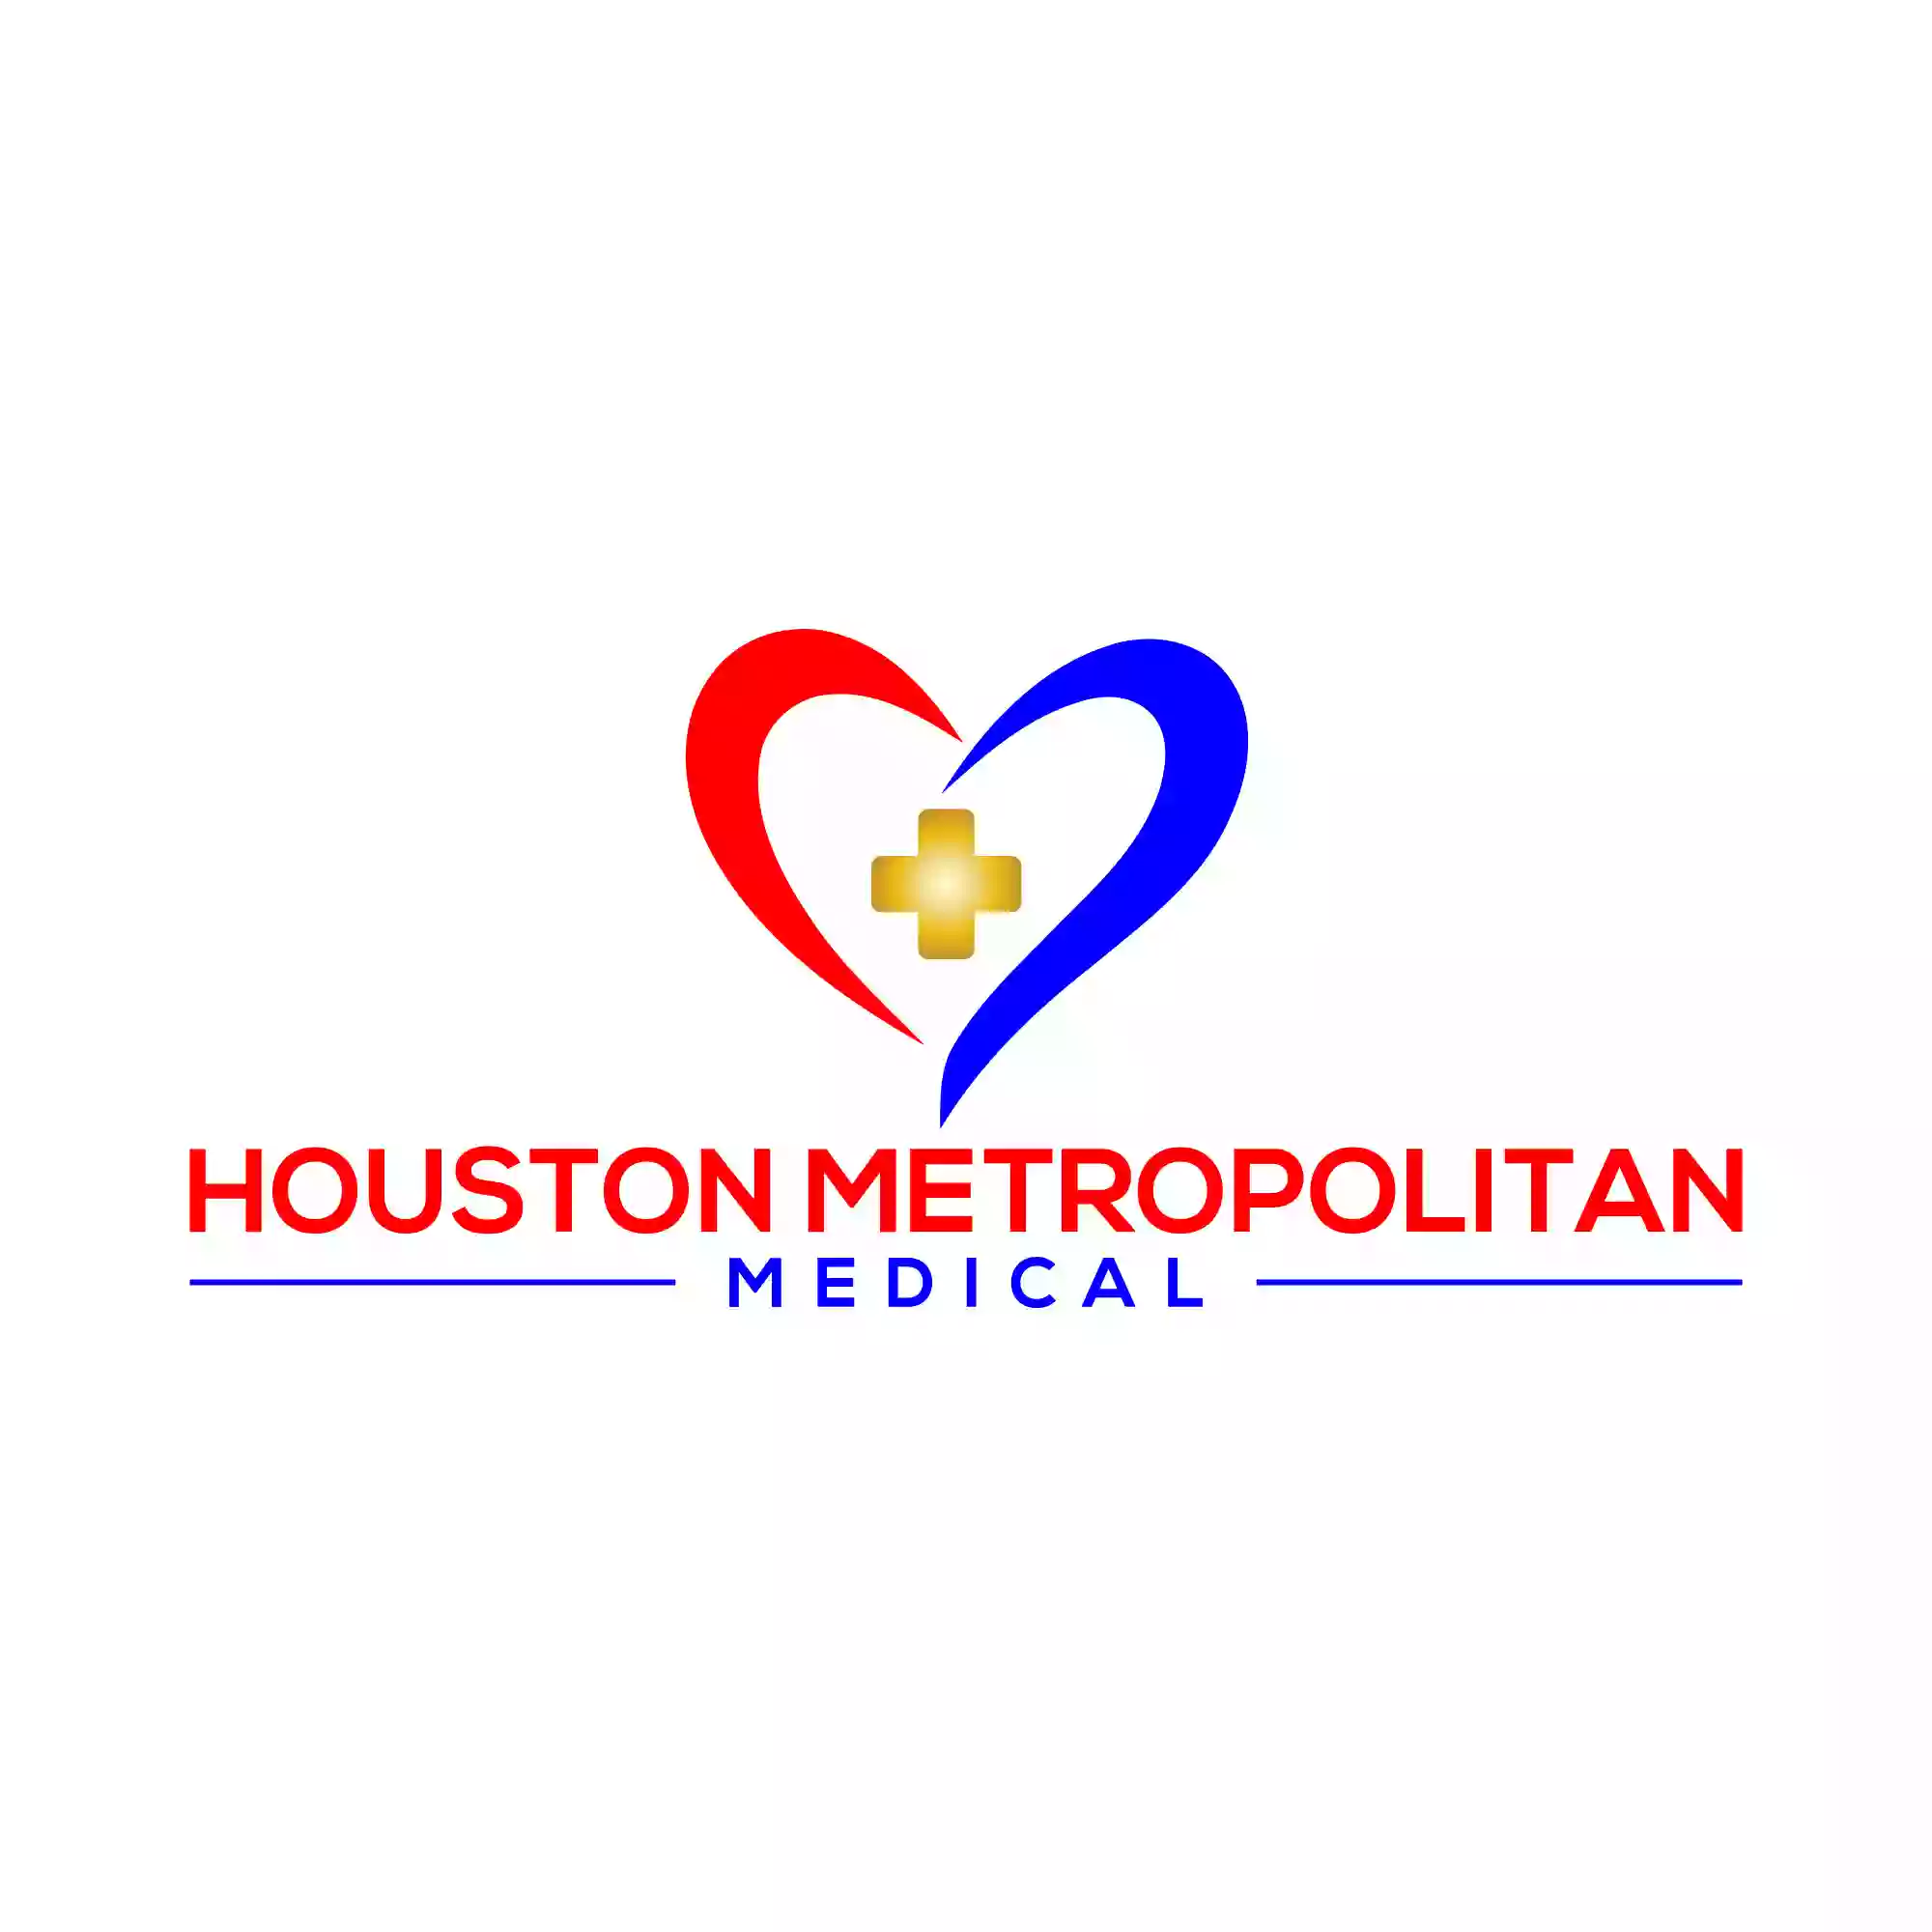 Houston Metropolitan Medical